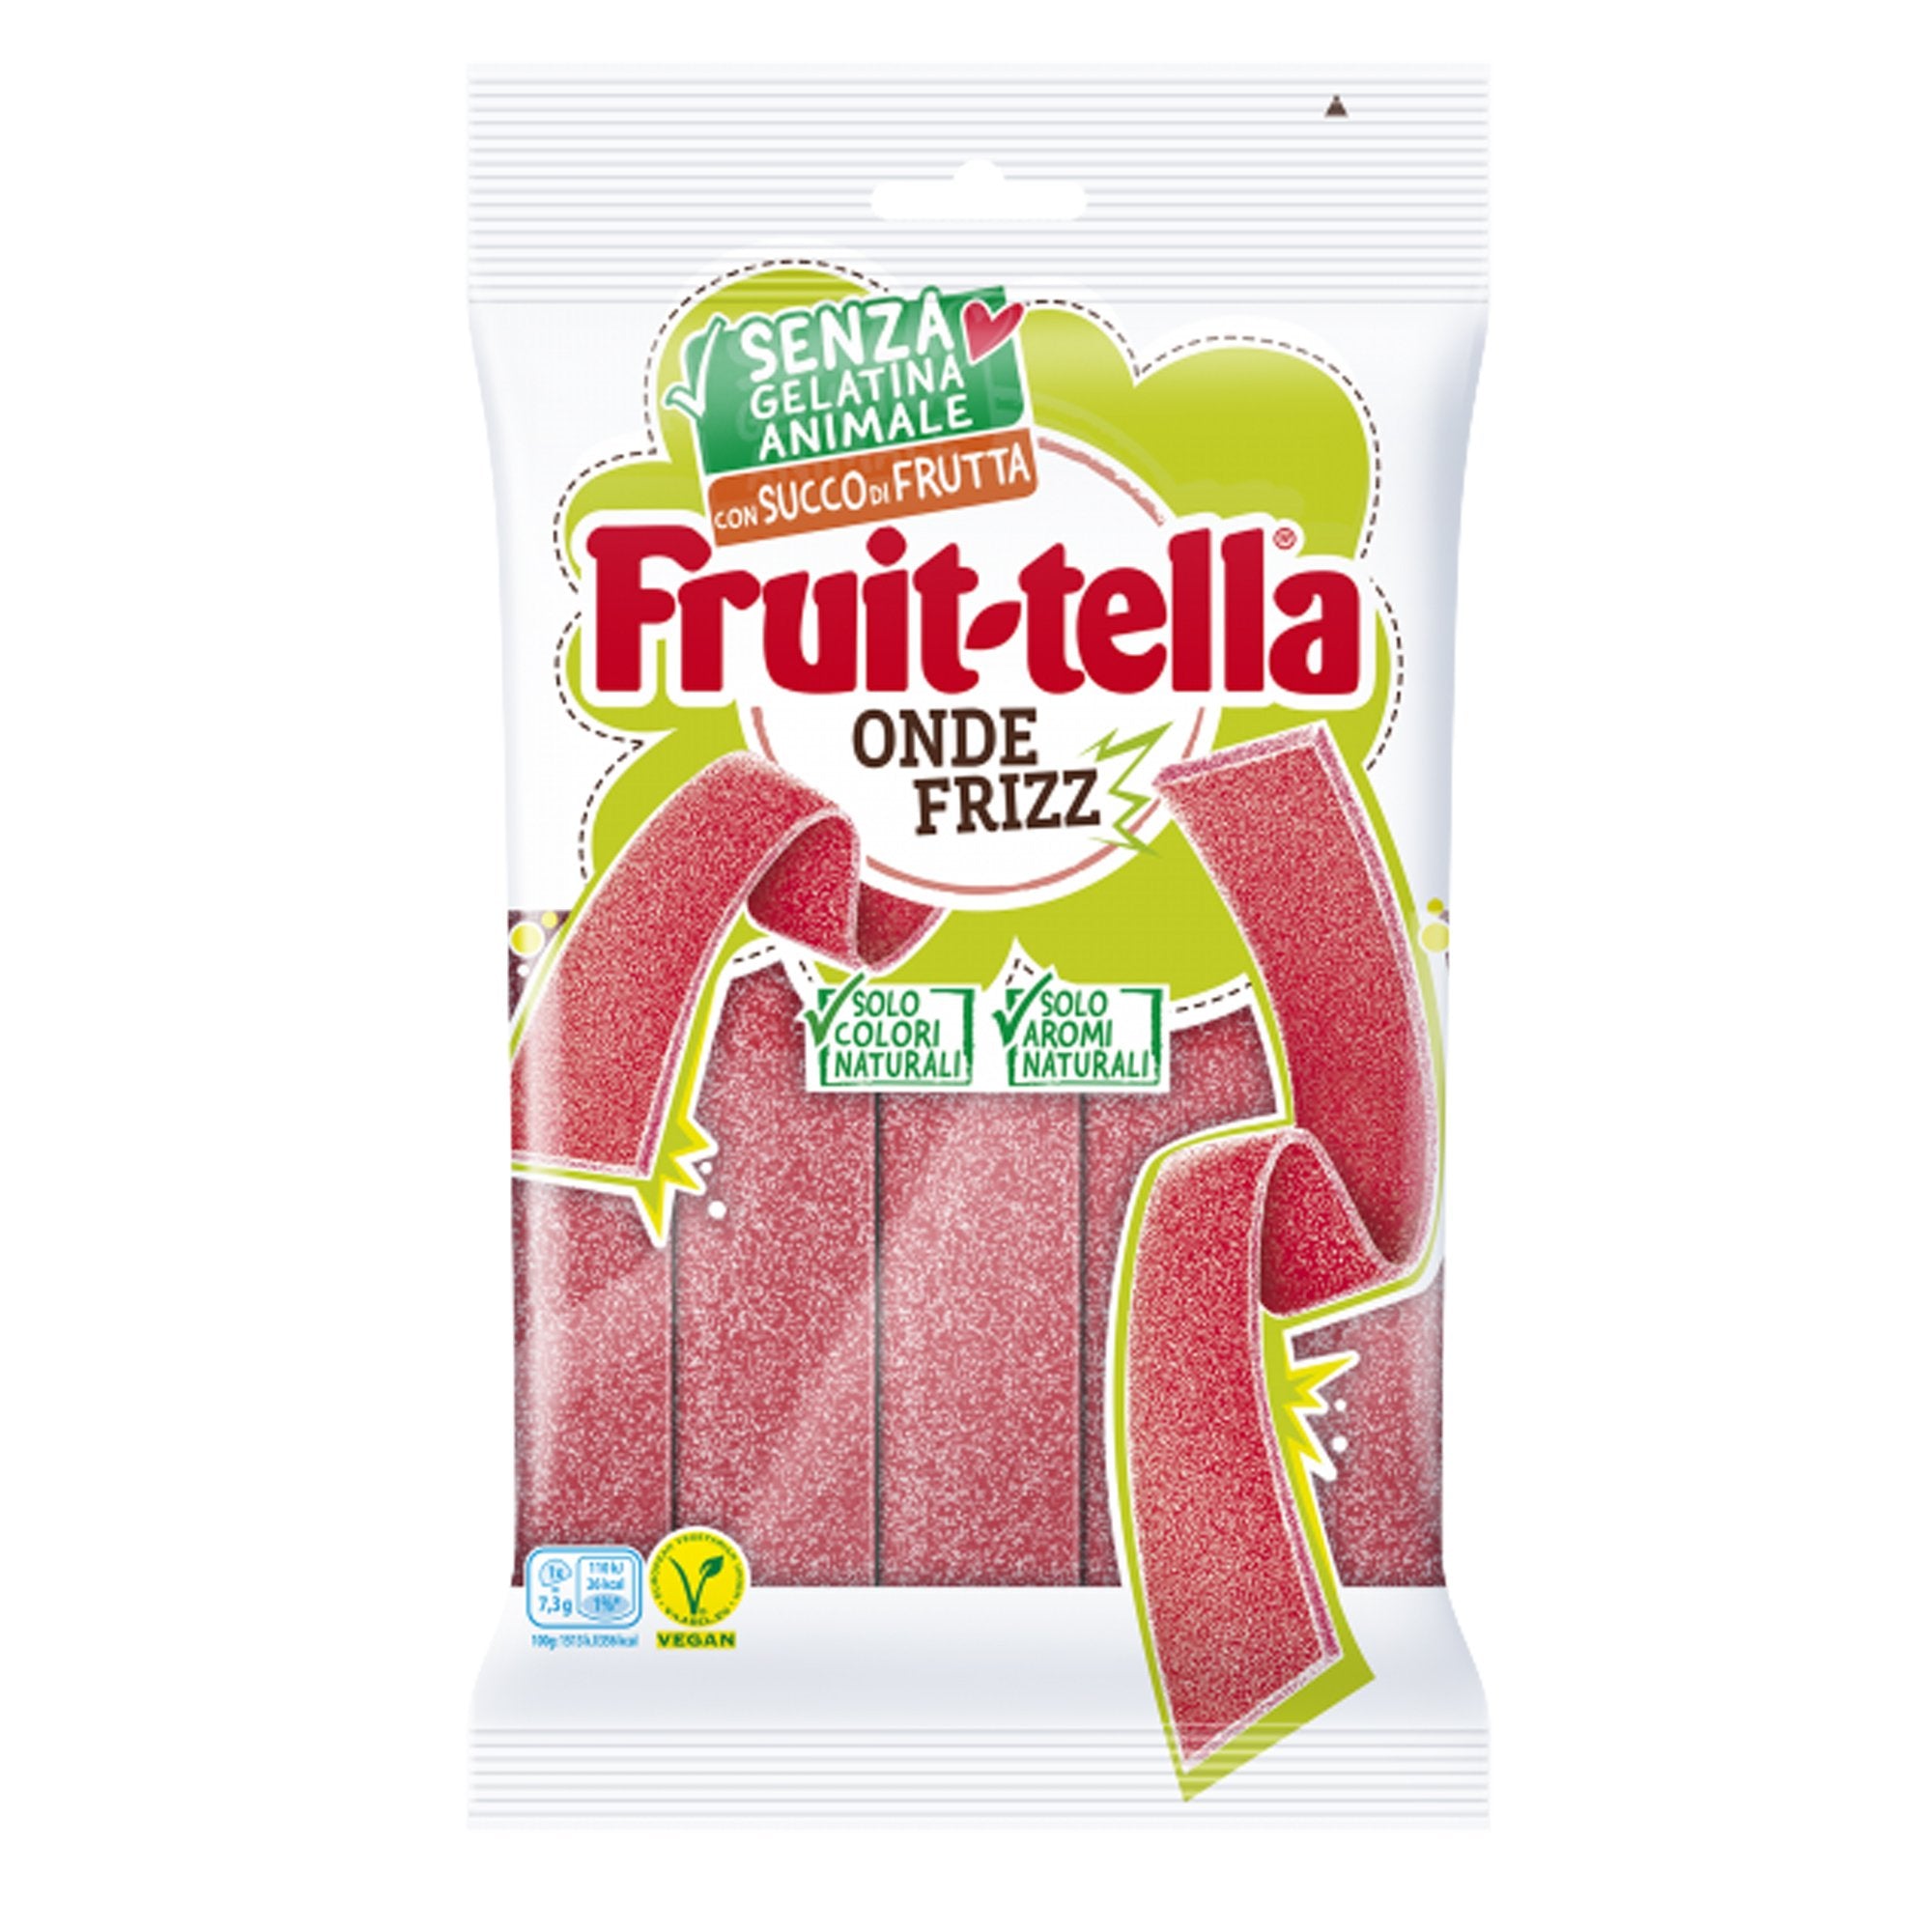 fruit-tella-caramelle-gommose-onda-frizz-senza-gelatina-animale-f-to-145gr